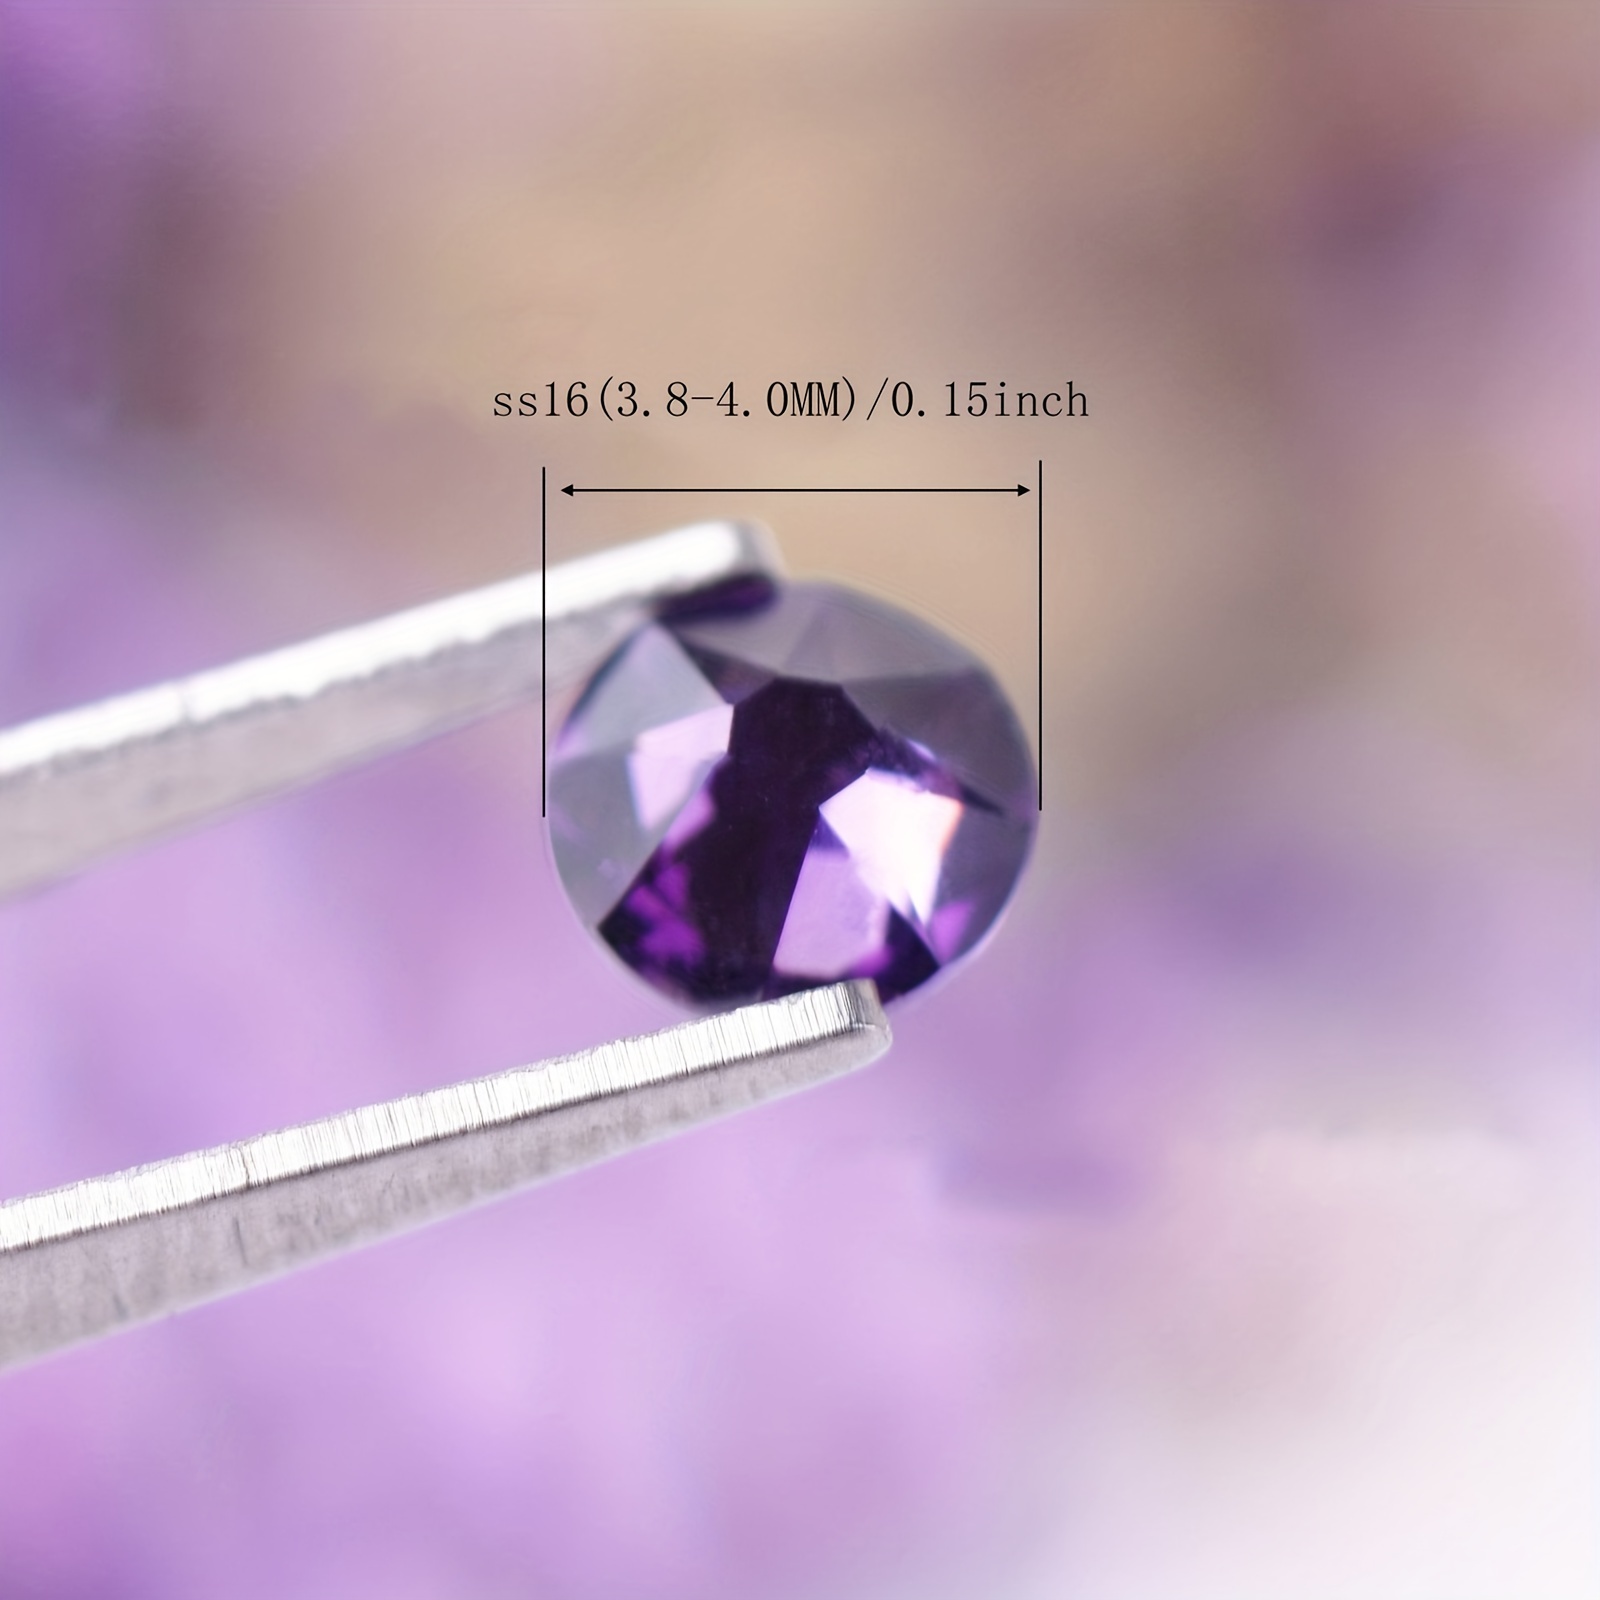 Beadsland Flat Back Crystal Rhinestones Round Gems, Sapphire (3.8-4.0mm) SS16/1440pcs